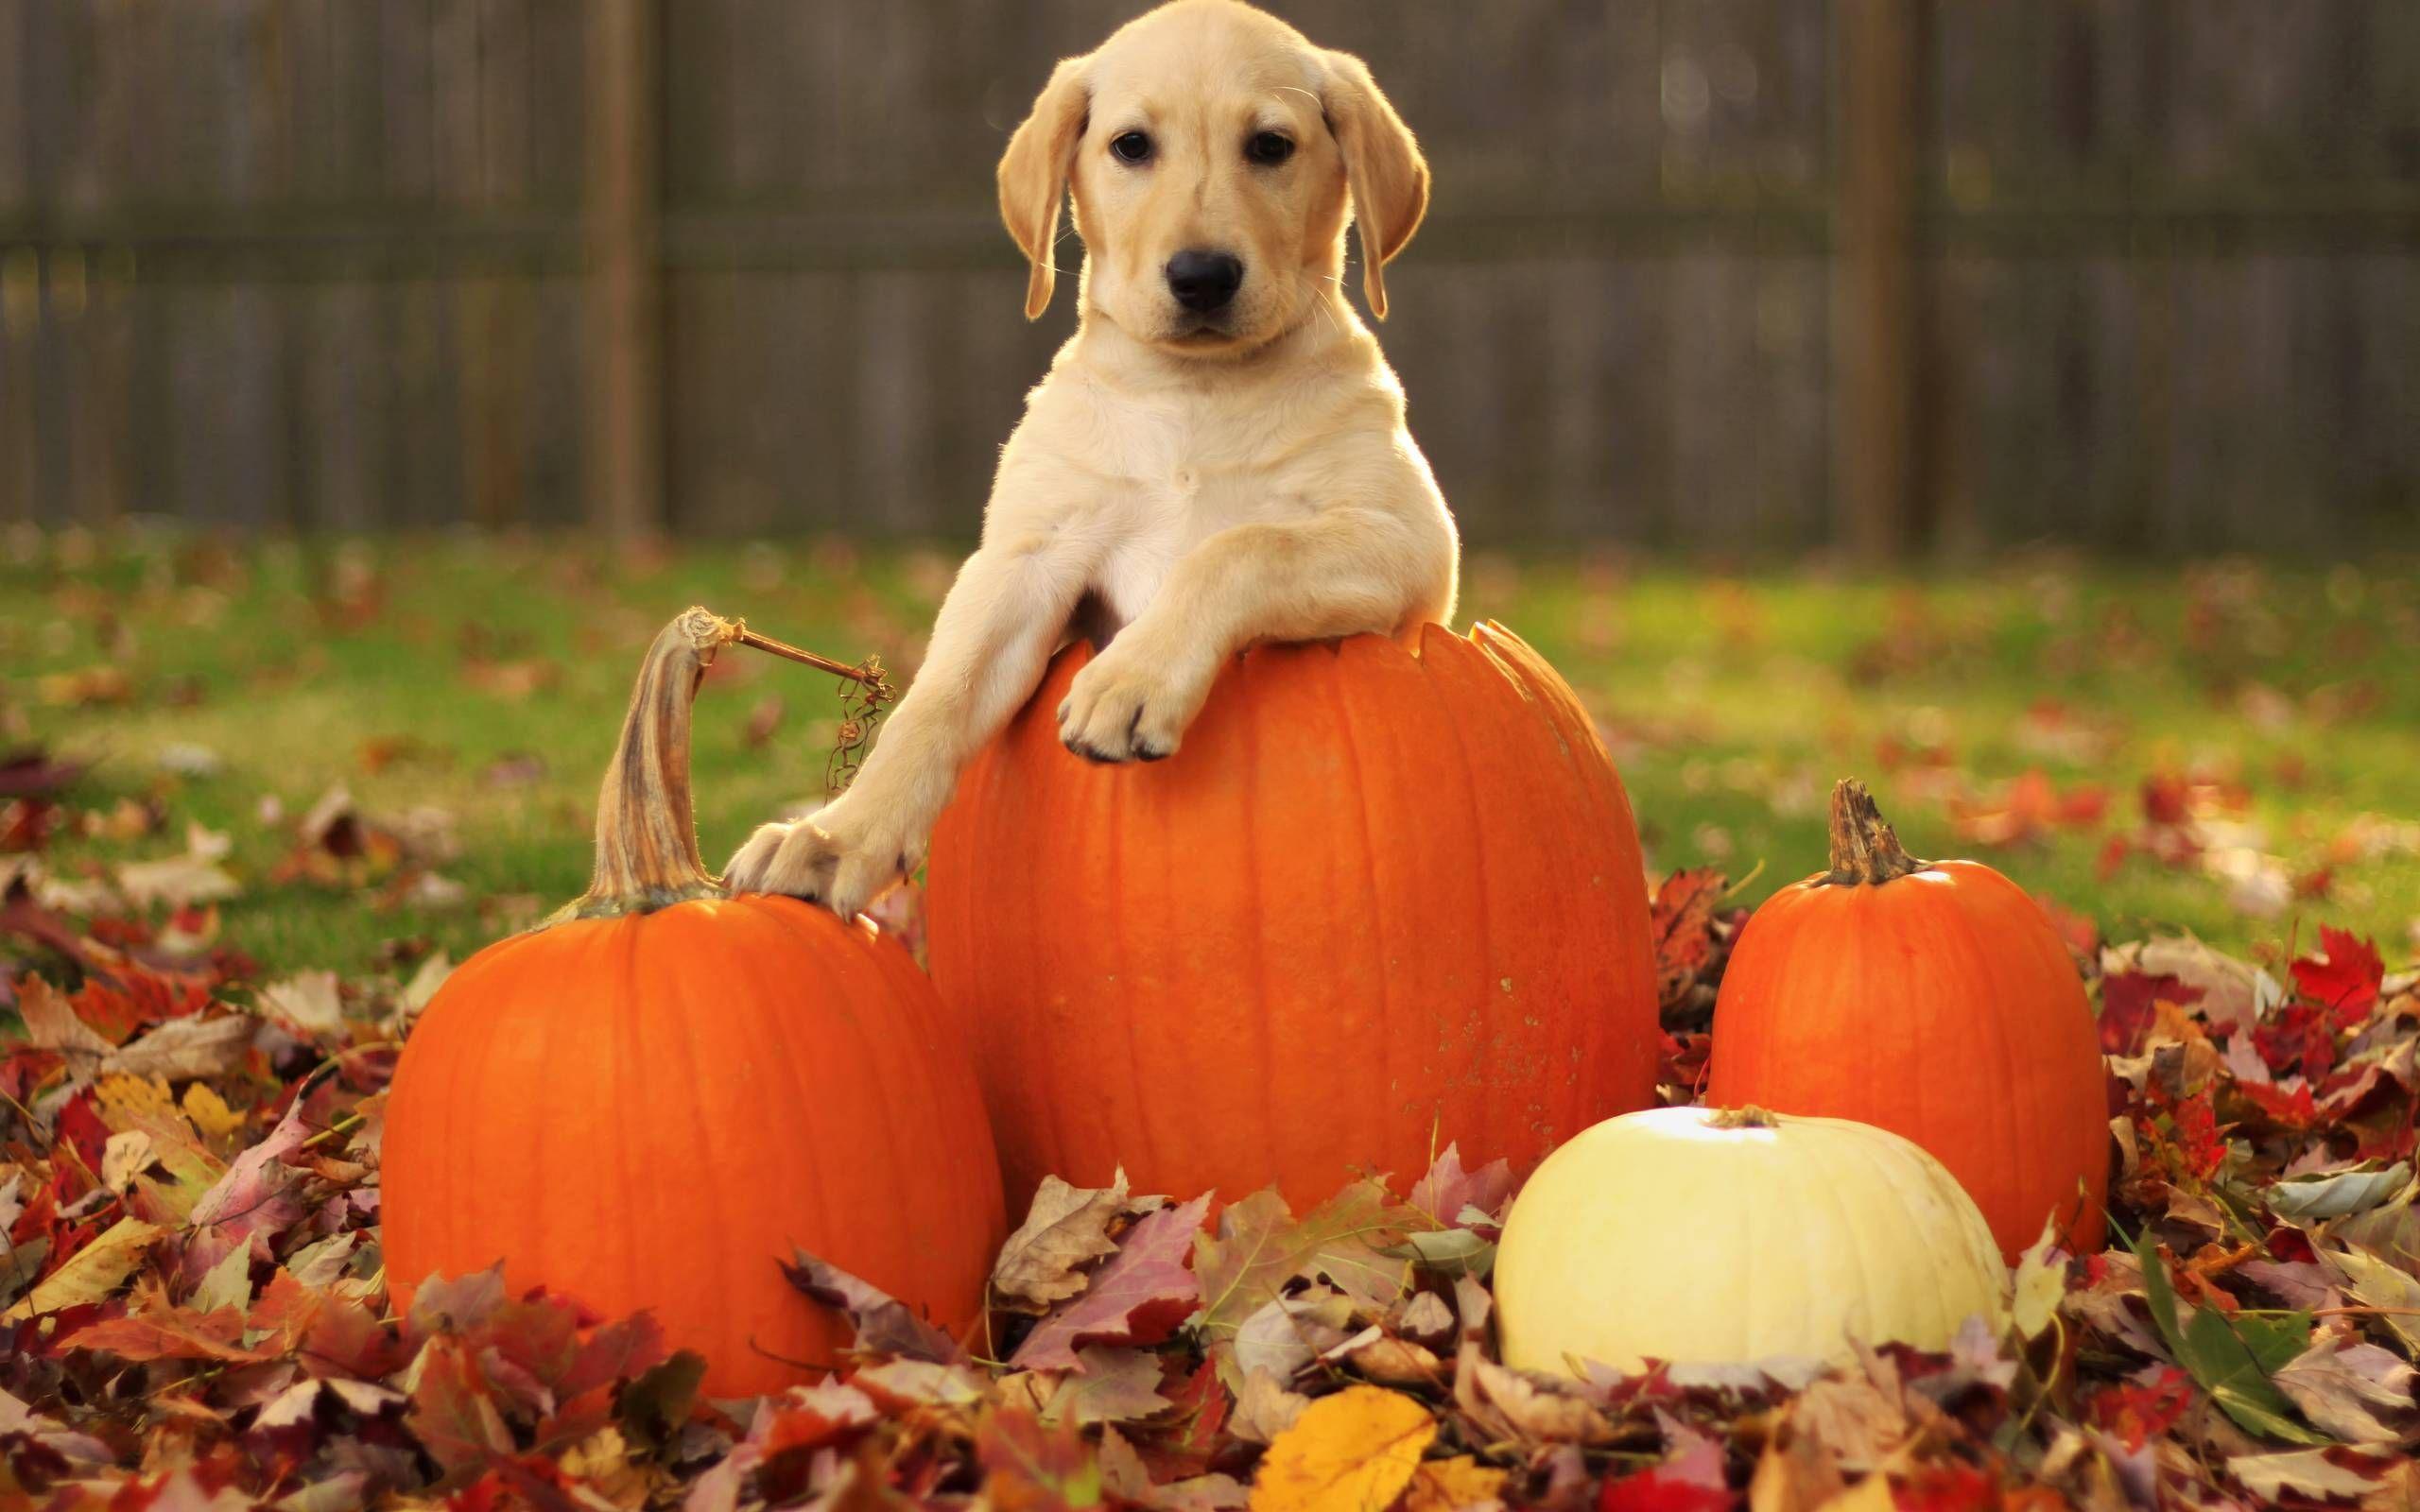 Free Desktop Pumpkin Wallpaper. Wallpaper, Background, Image. Fall dog, Dog photohoot, Dog calendar